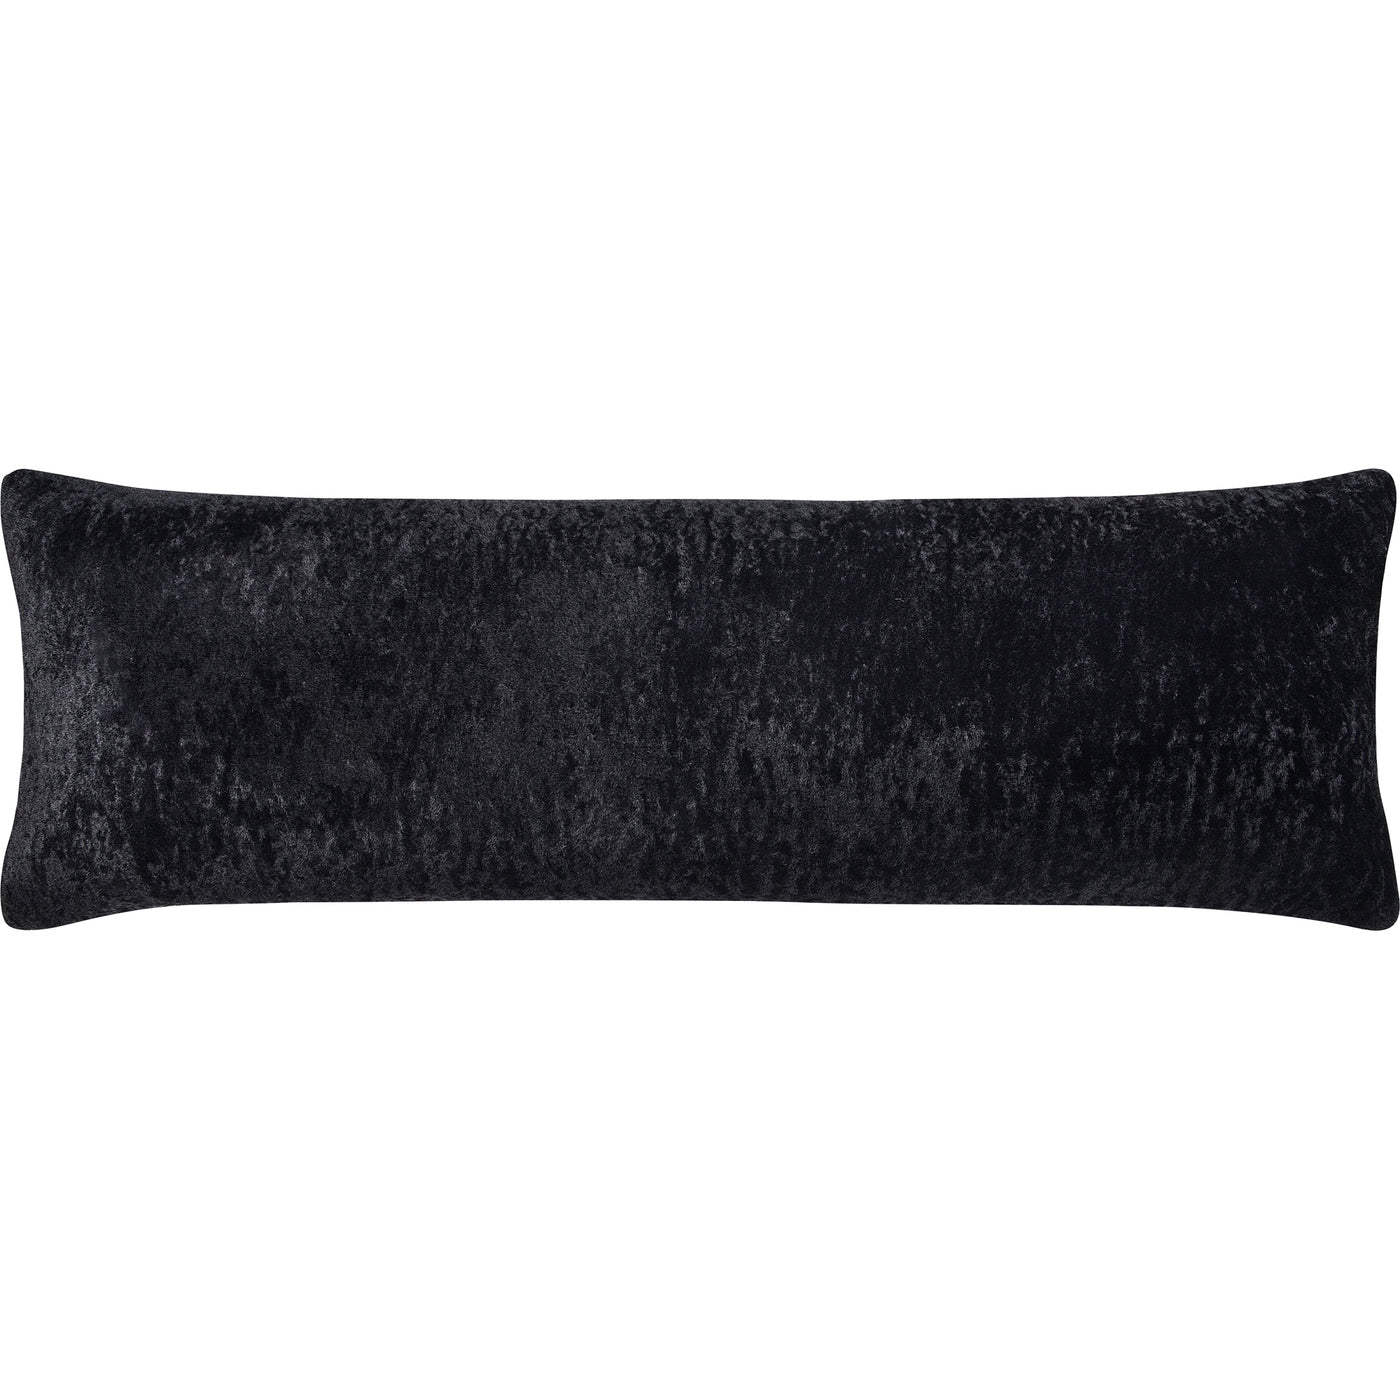 Abbie Kidney Pillow (Lux size)